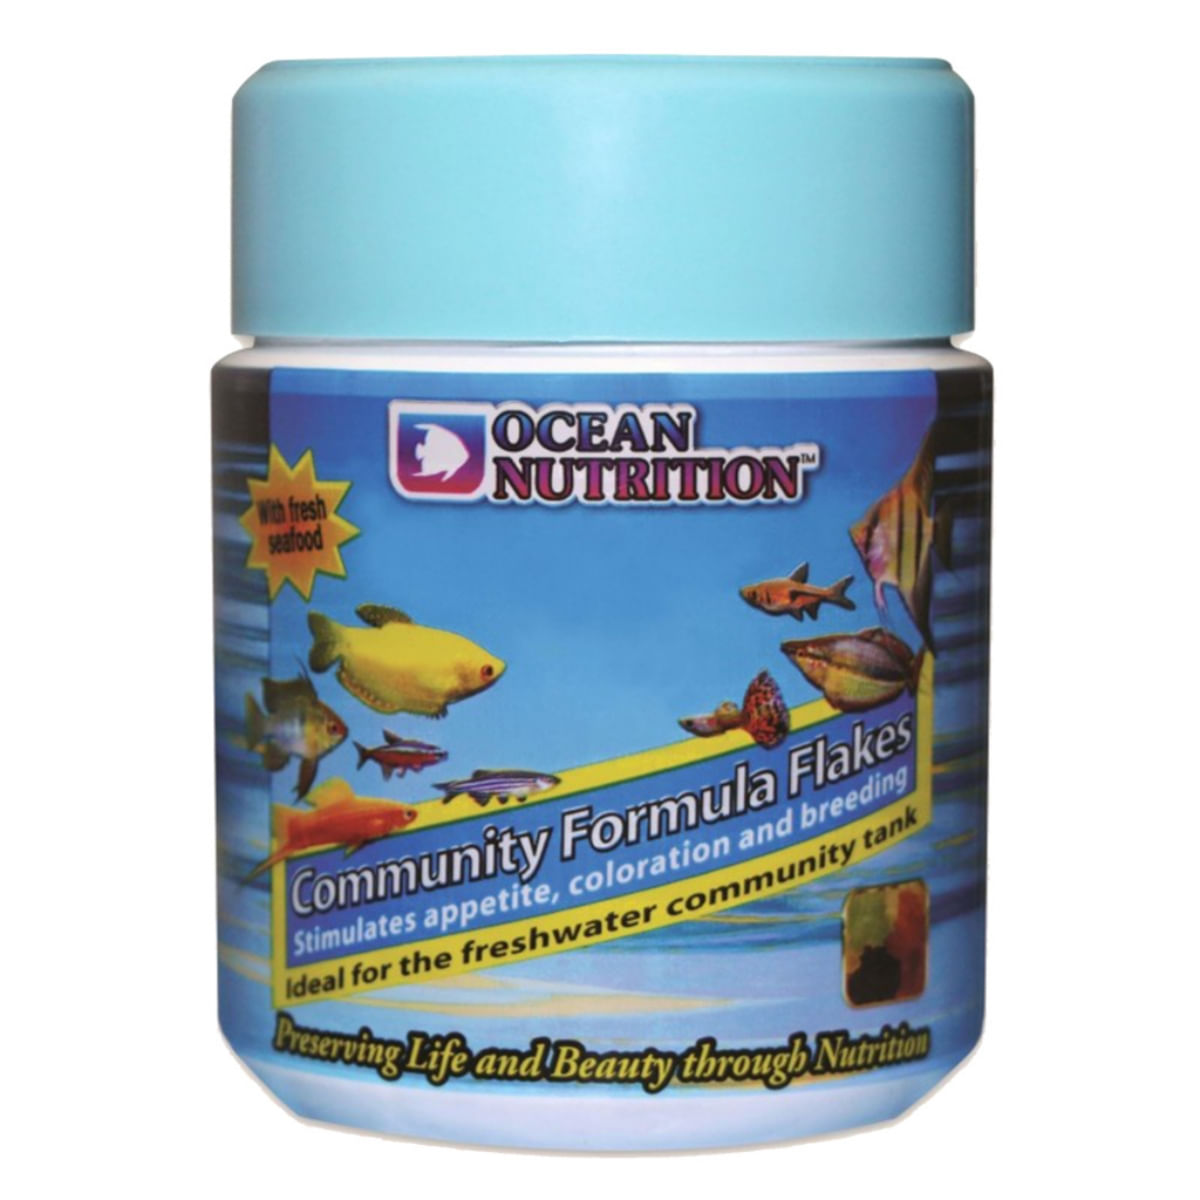 OCEAN NUTRITION Community Formula Flakes, 34g 34g